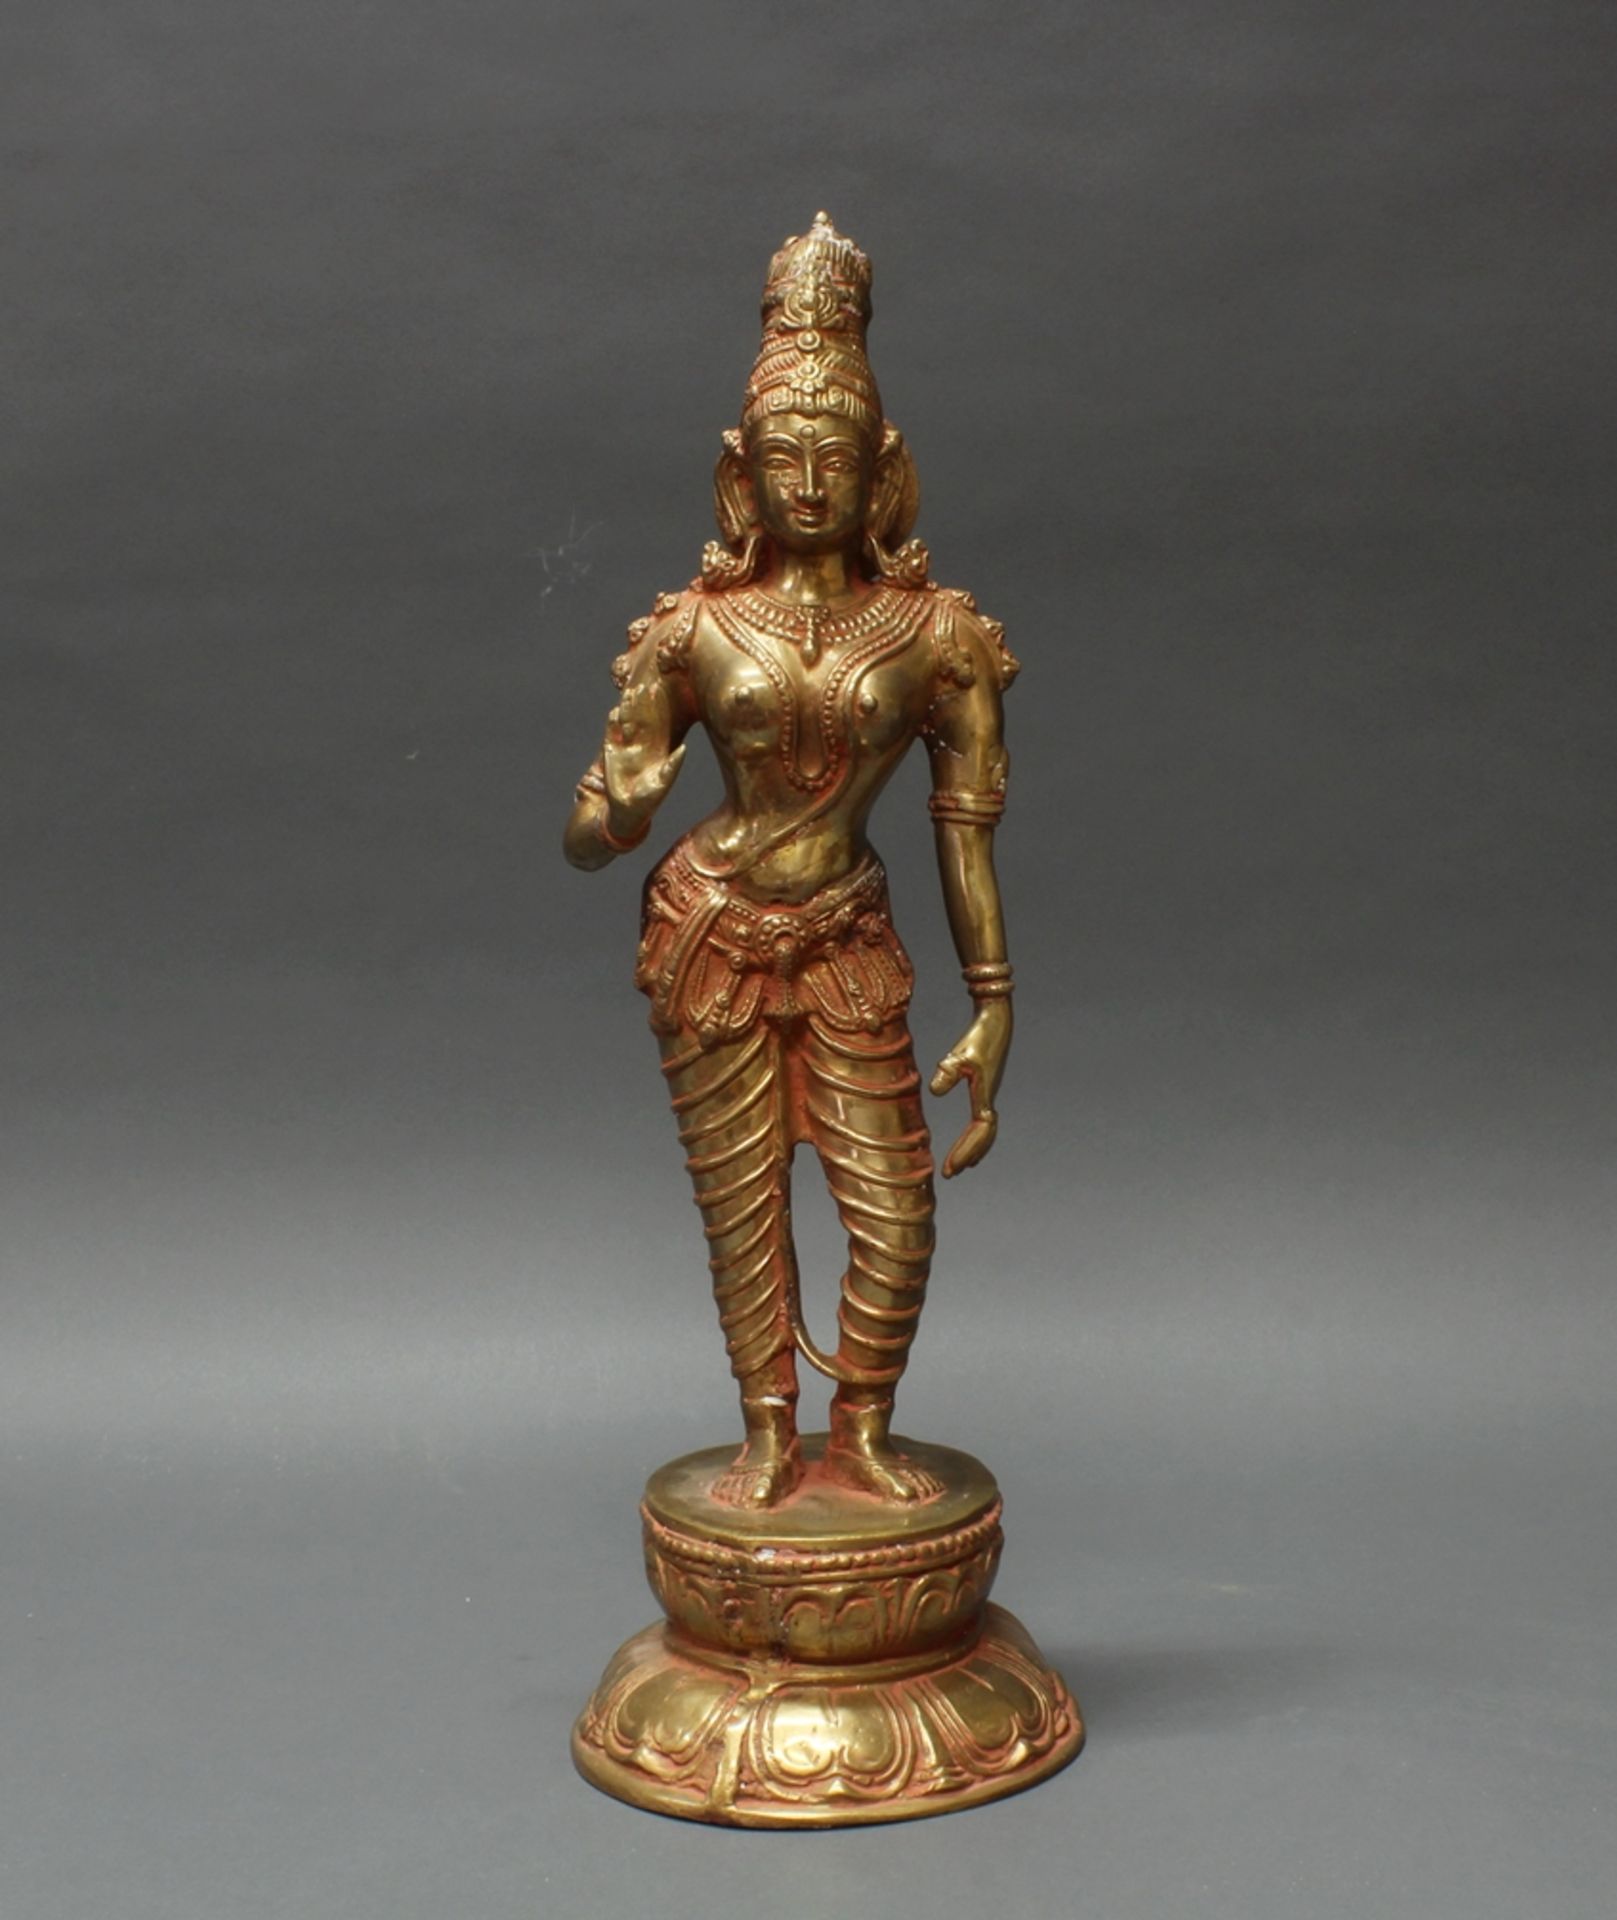 Figur, "Lakshmi", Indien, 20. Jh., Messingbronze, Reste von roter Bemalung, 50 cm hoch